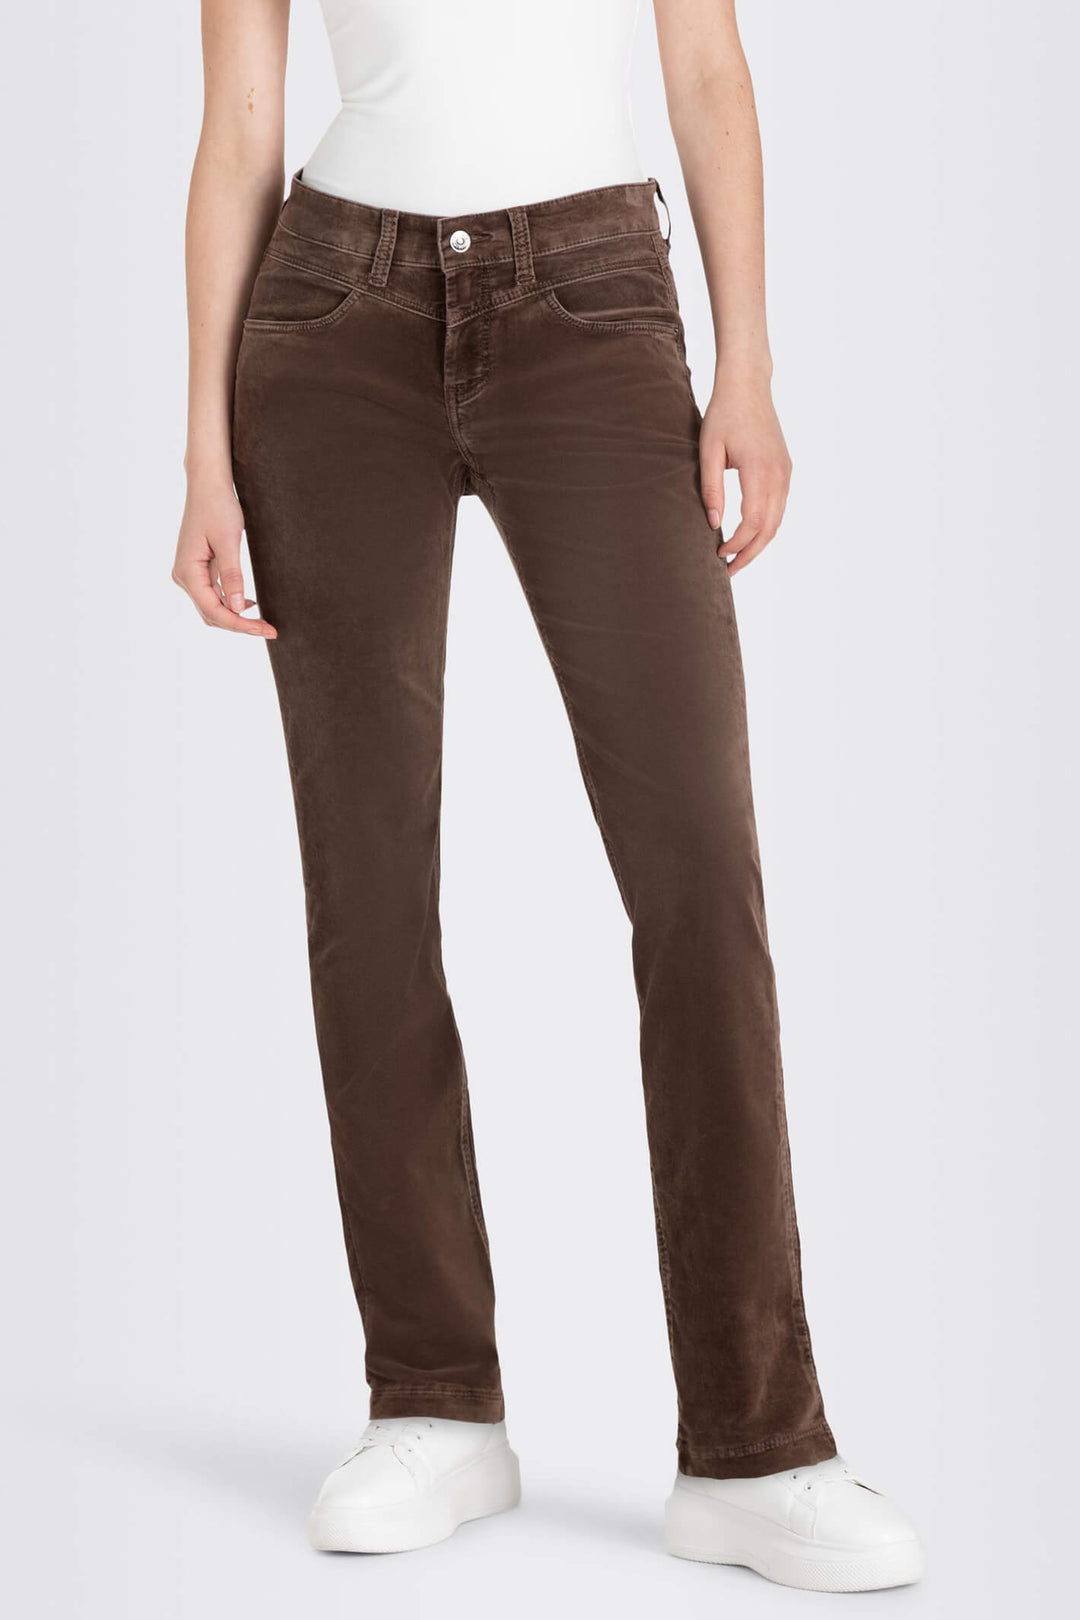 Mac 5798-00-0456 278 Fawn Brown Slim Velvet Jeans - Olivia Grace Fashion